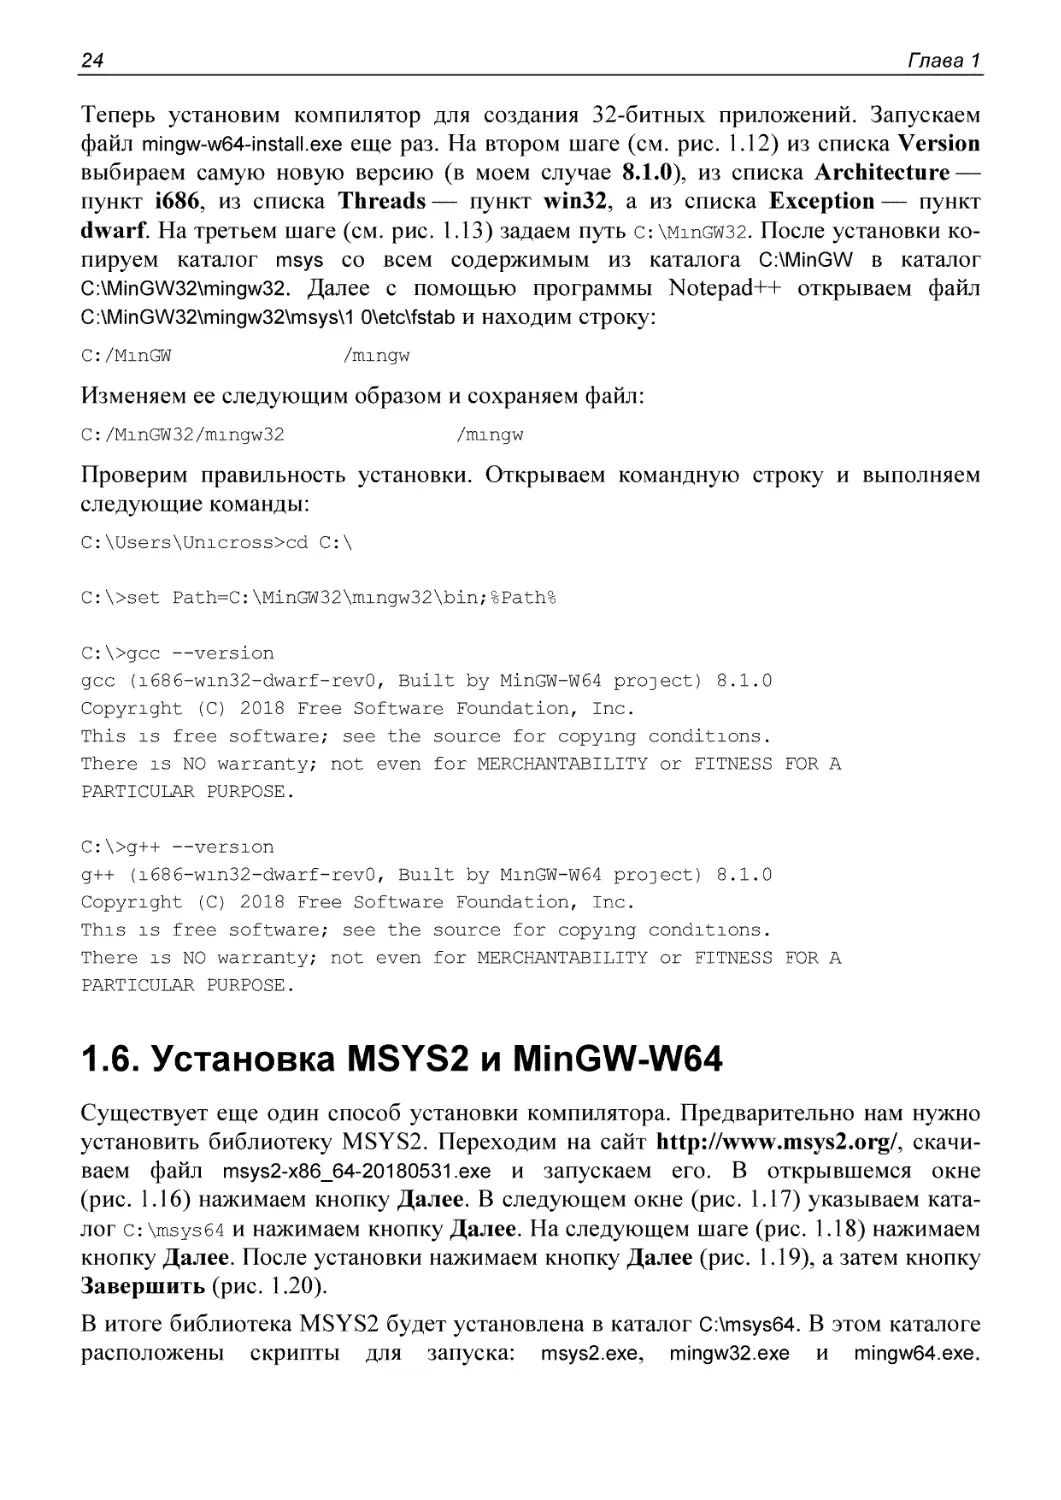 1.6. Установка MSYS2 и MinGW-W64